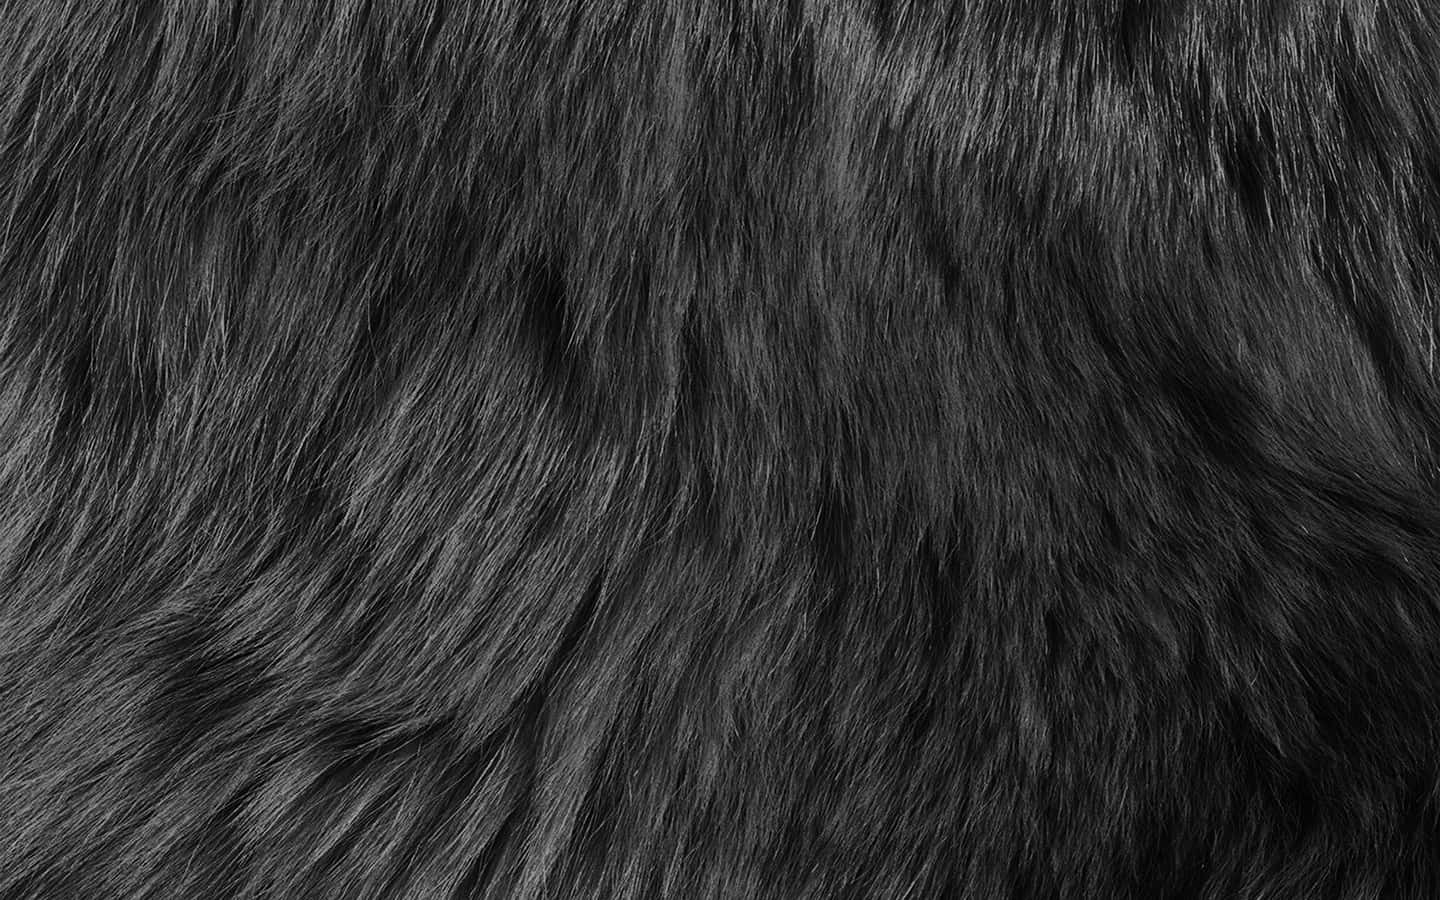 Black Textured Hair Closeup Wallpaper